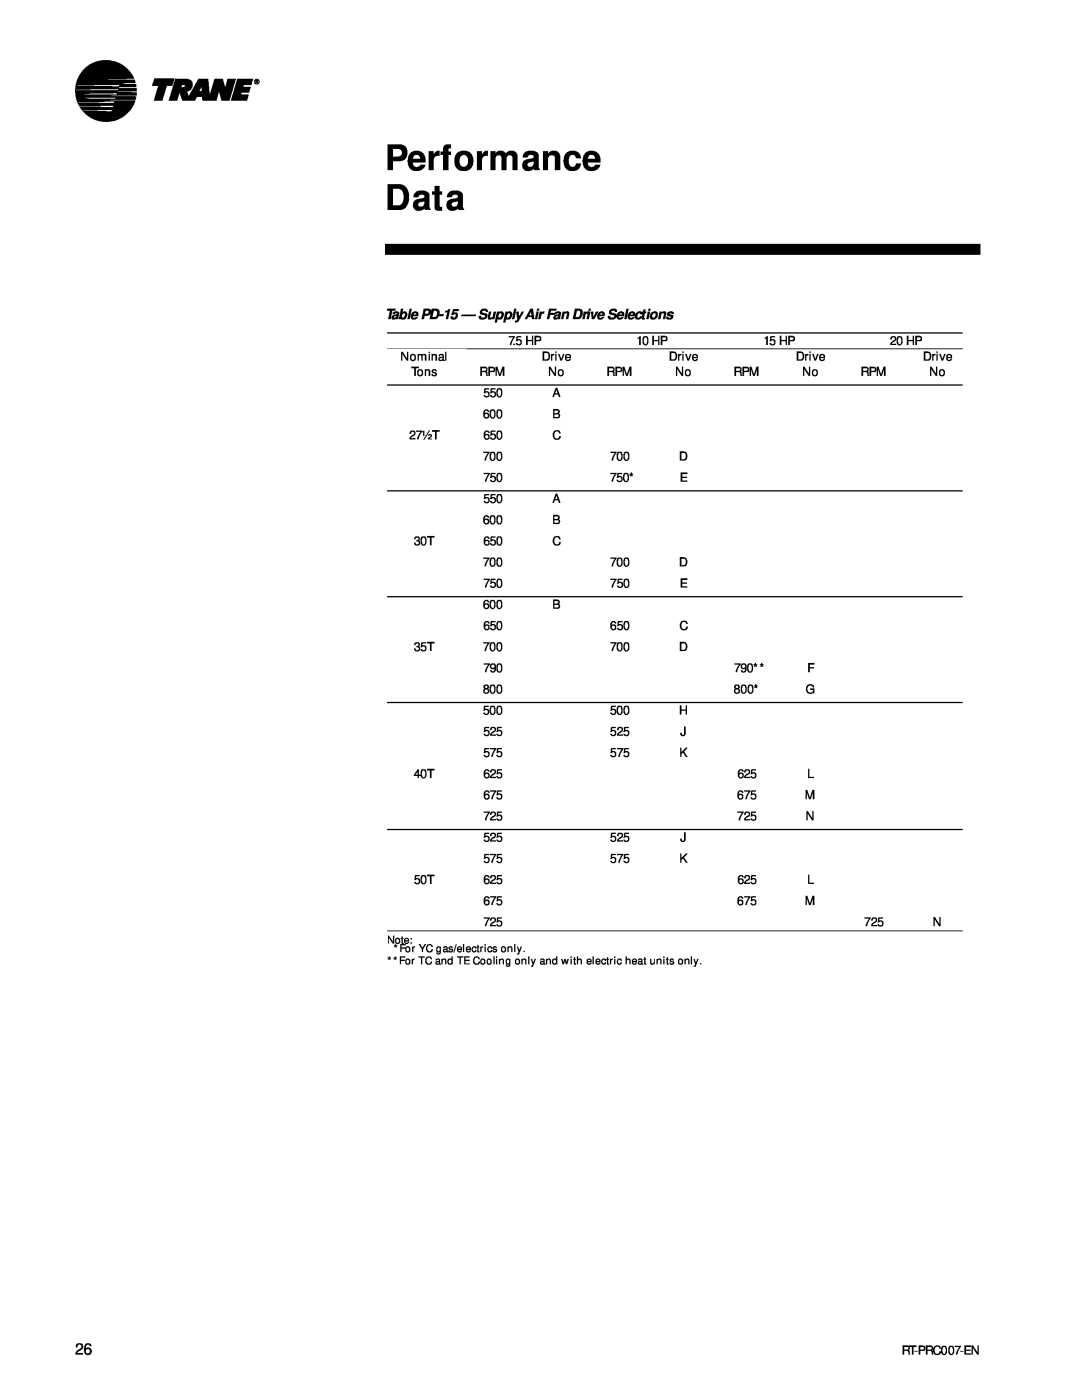 Trane RT-PRC007-EN manual Performance Data, Table PD-15- Supply Air Fan Drive Selections 